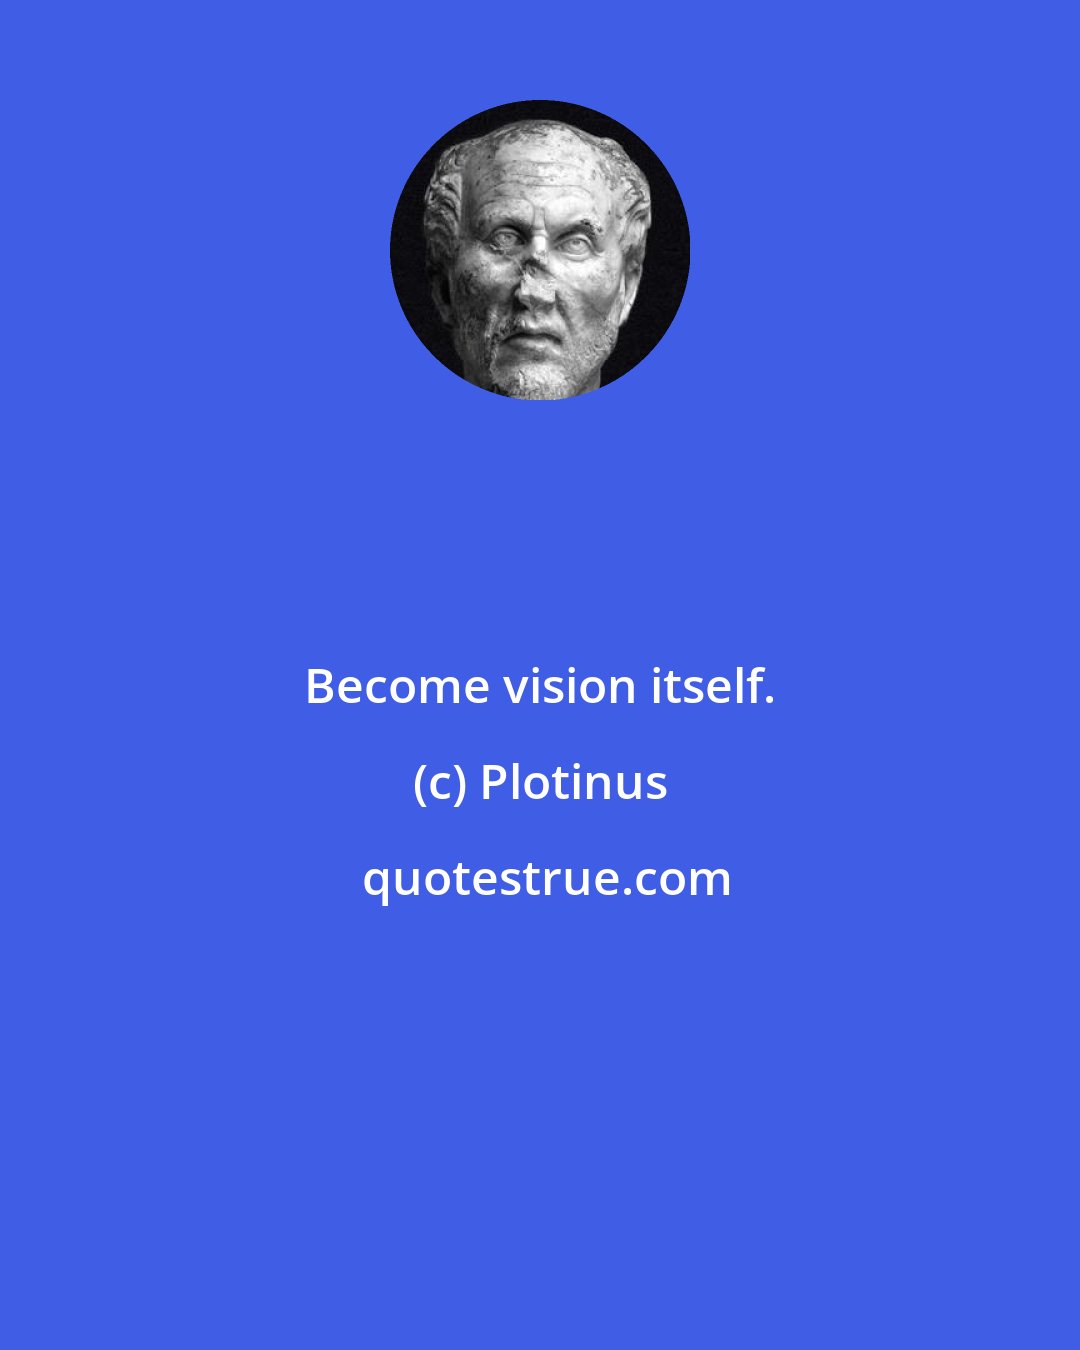 Plotinus: Become vision itself.